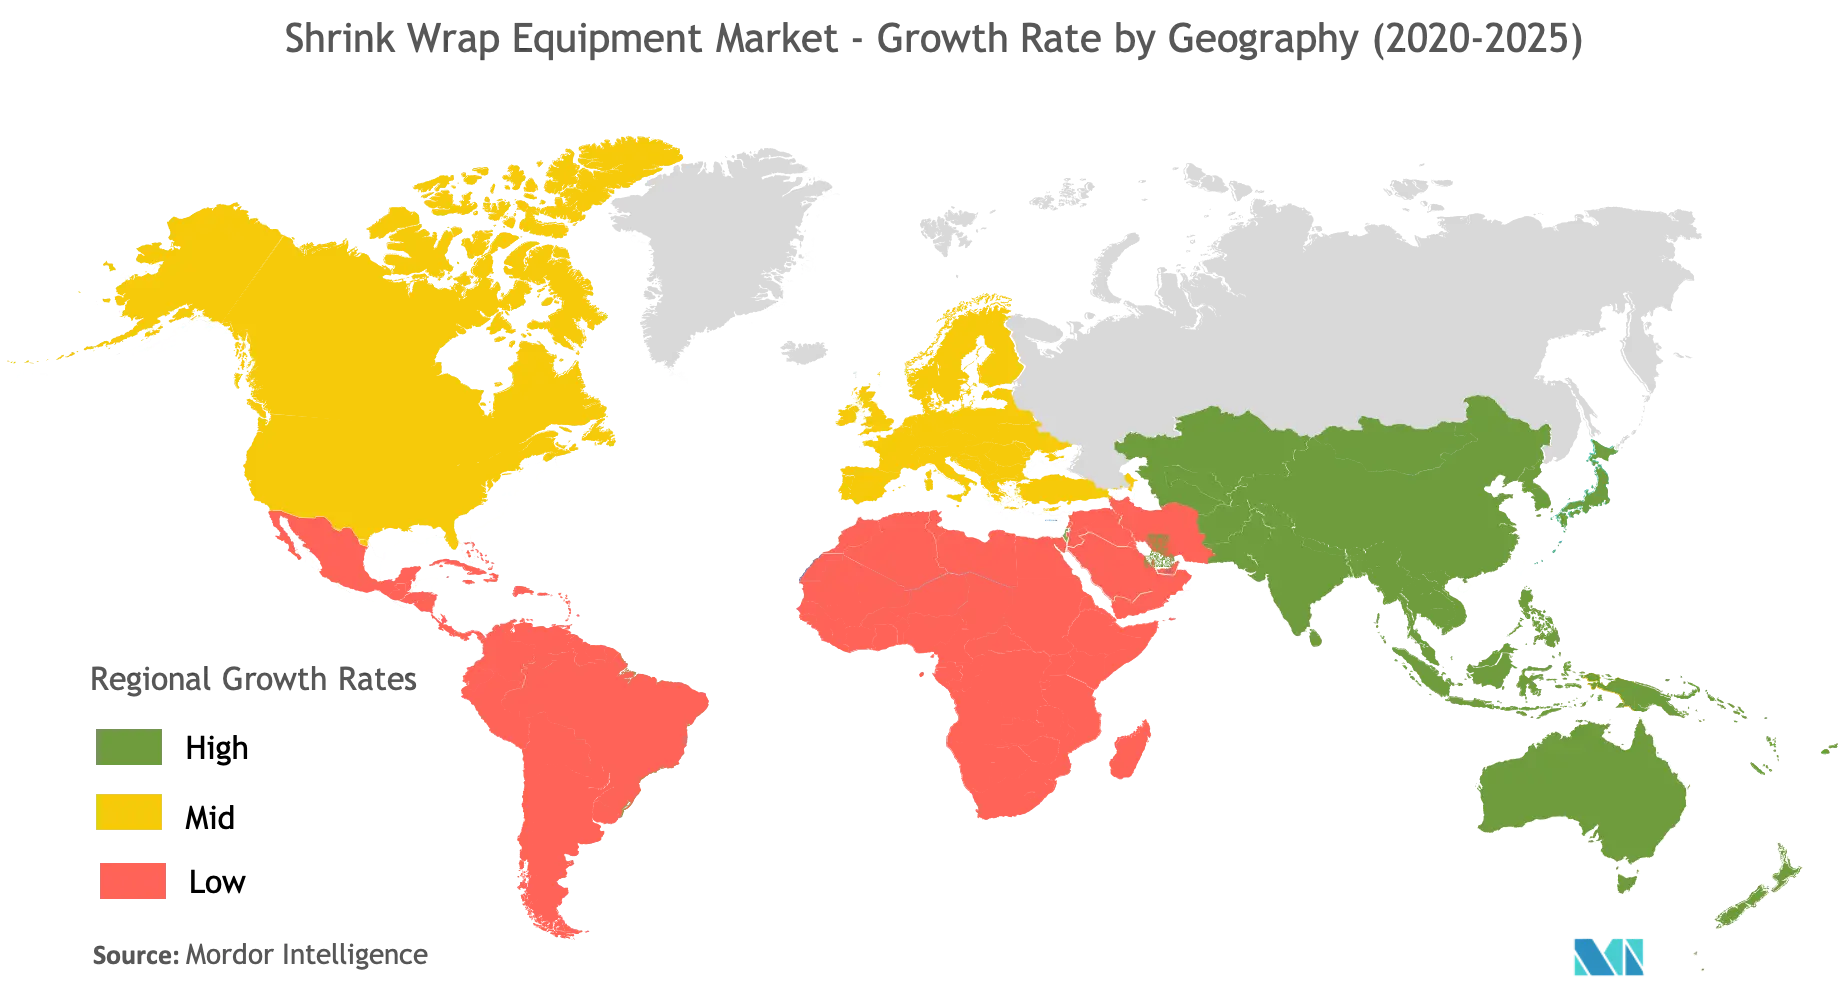 Shrink Wrap Equipment Market Growth